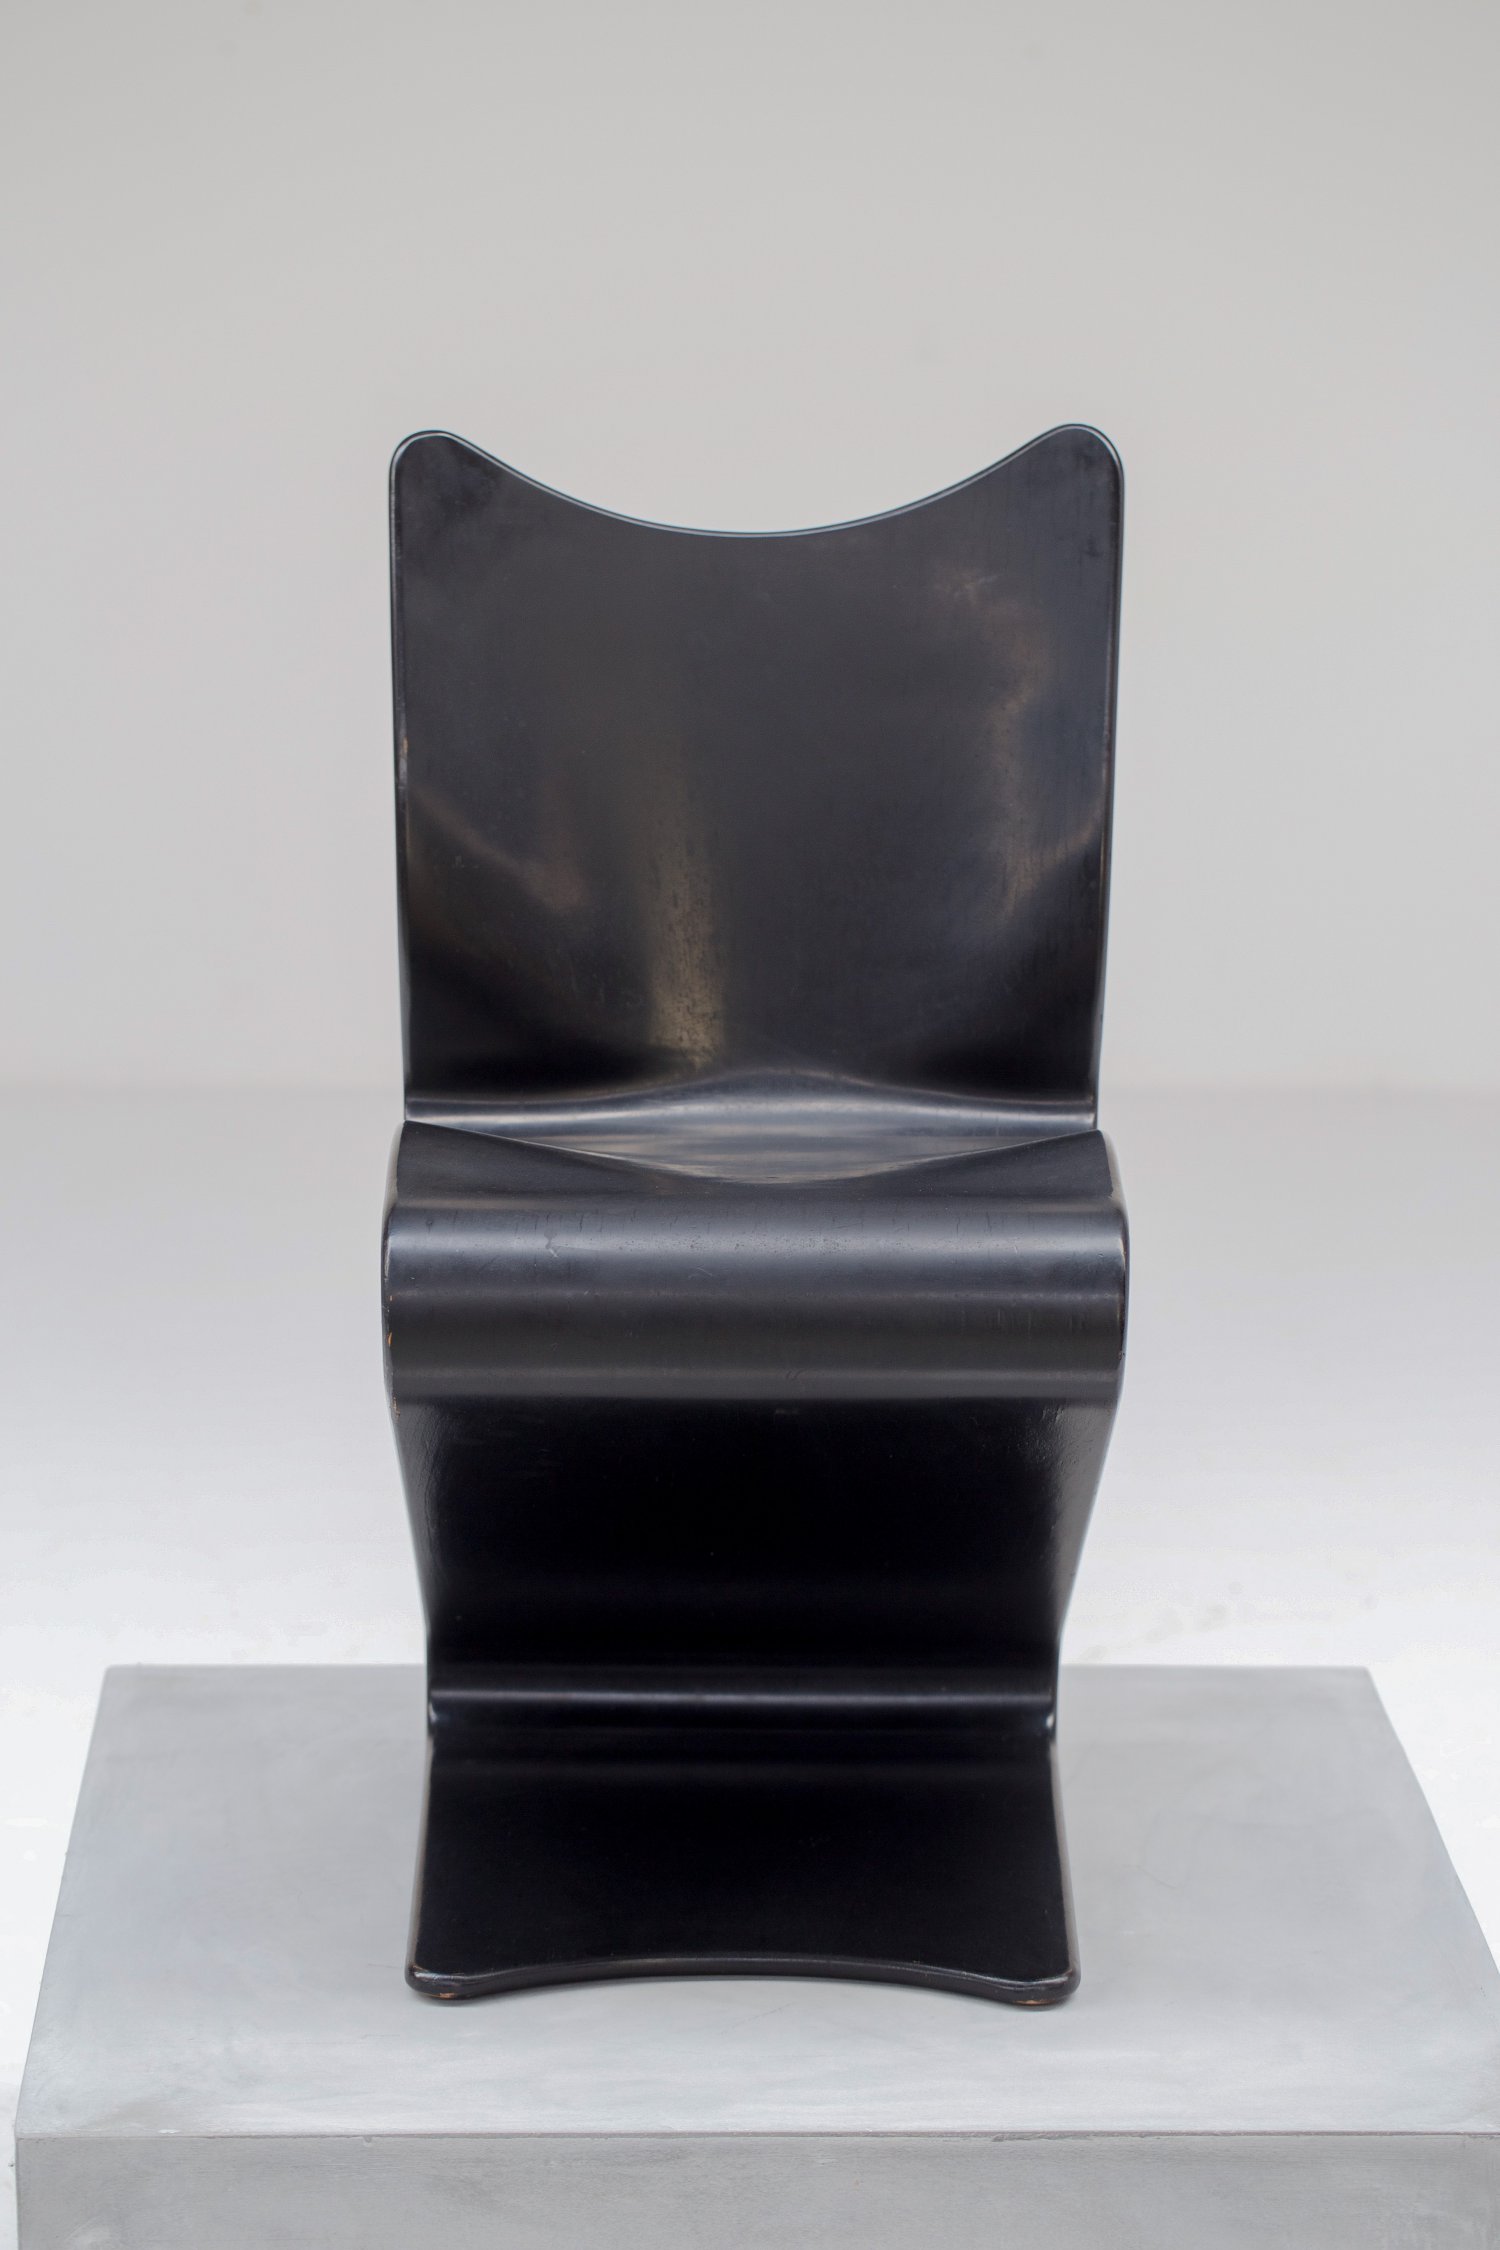 S 275 chair by Verner Panton